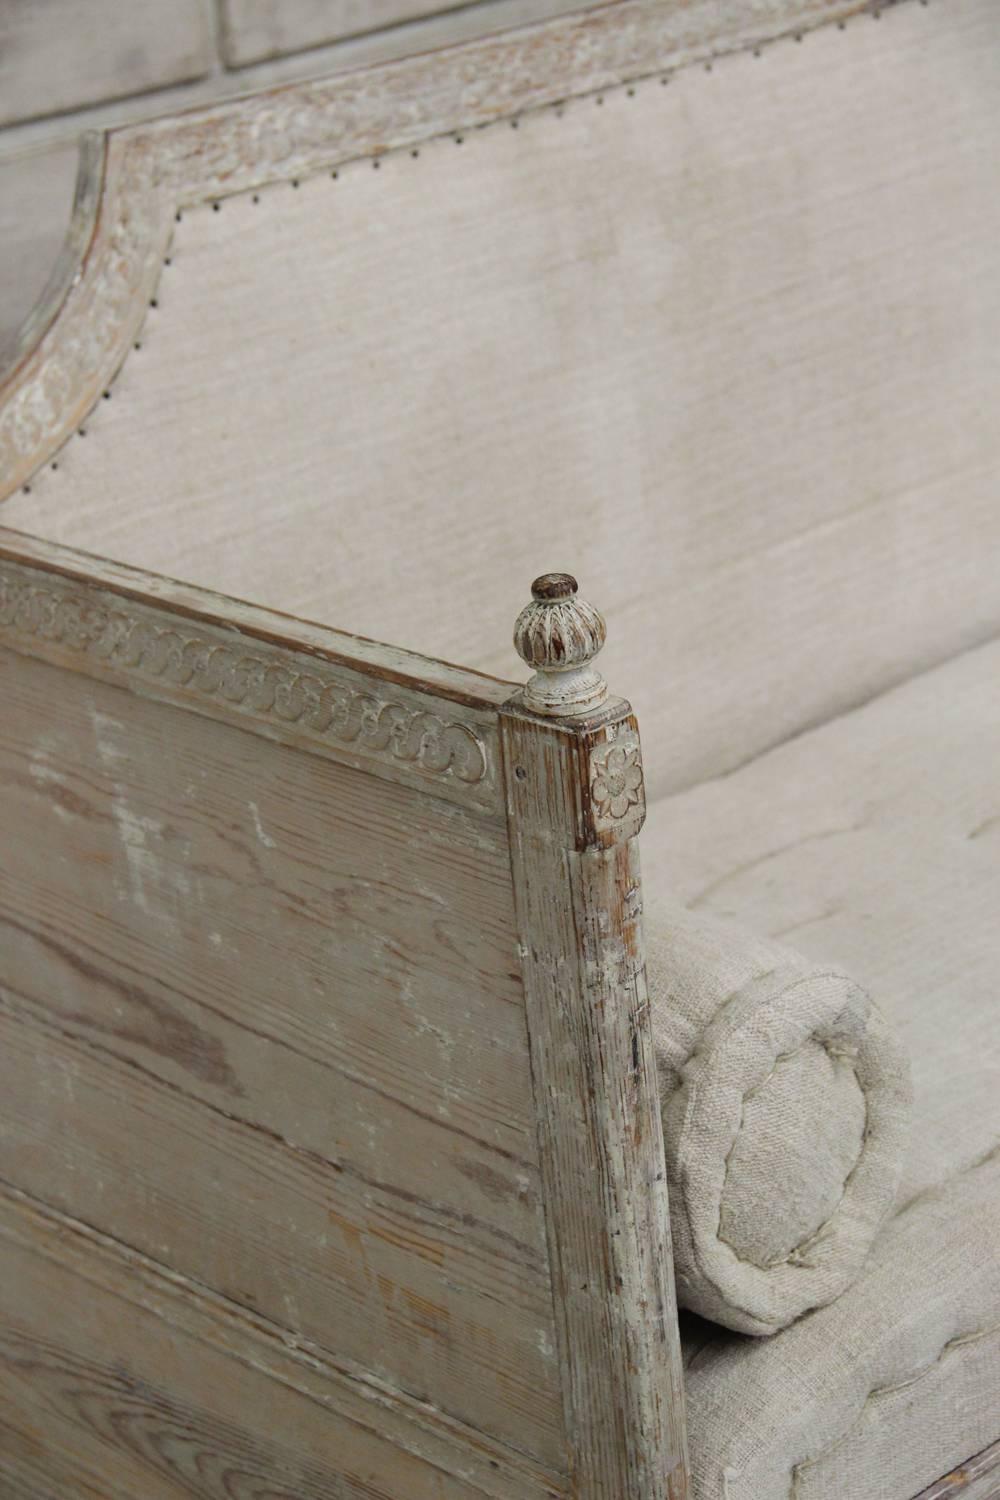 Swedish Early Gustavian Period Sofa in Original Paint, 18th Century Antique 3